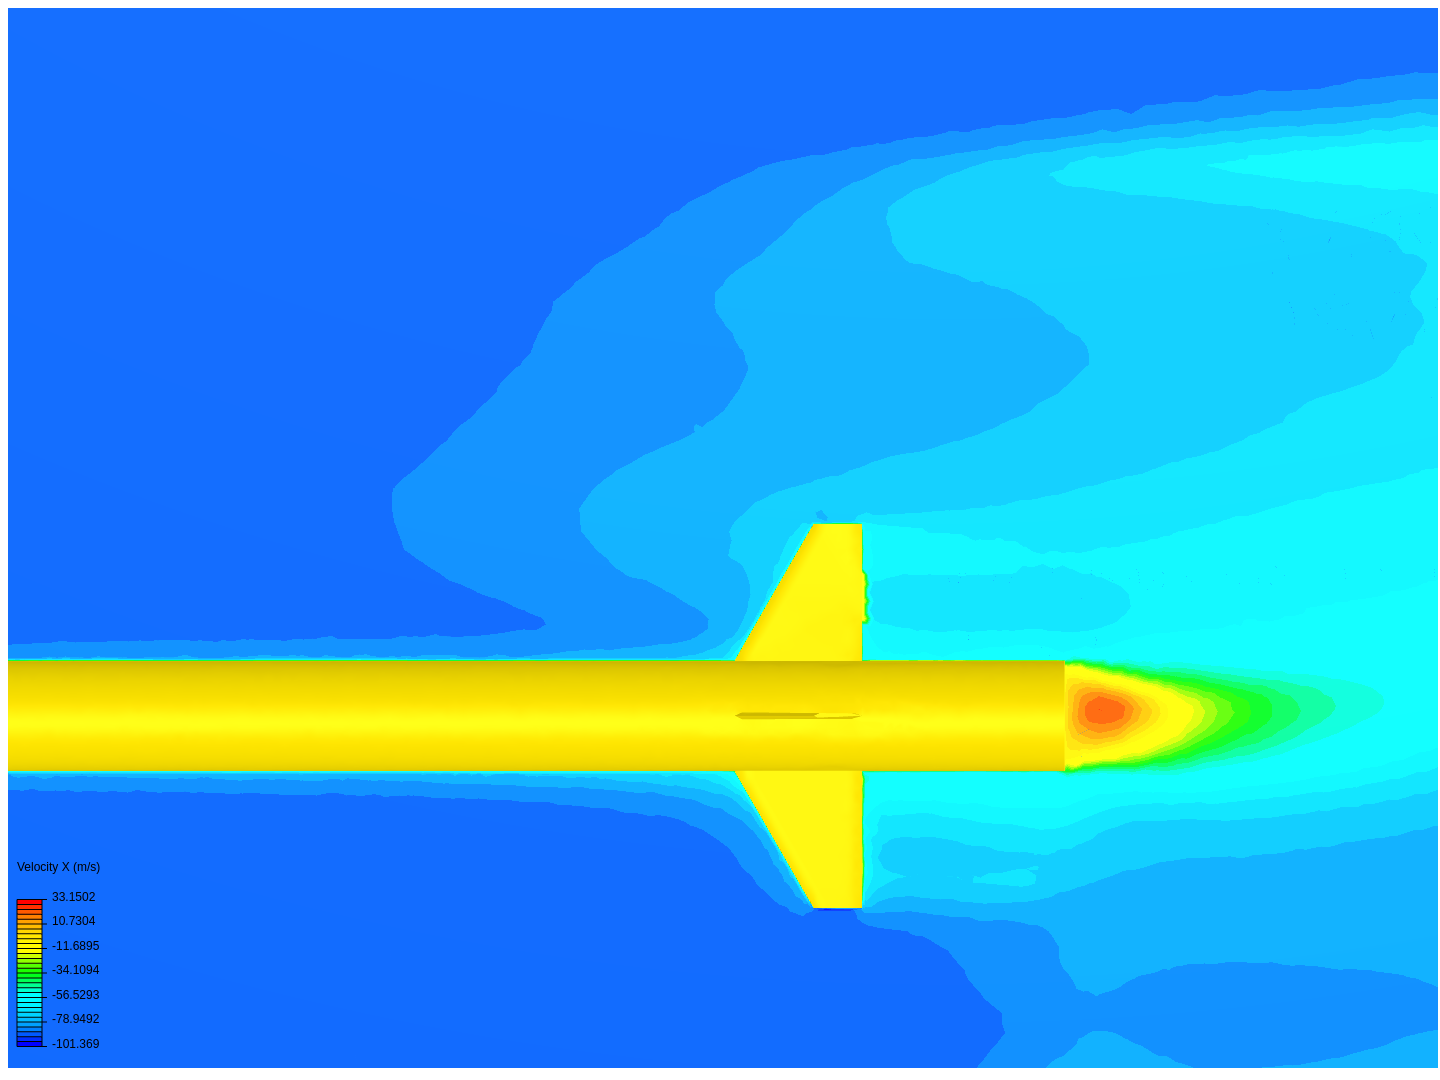 Rocket Aerodynamics image